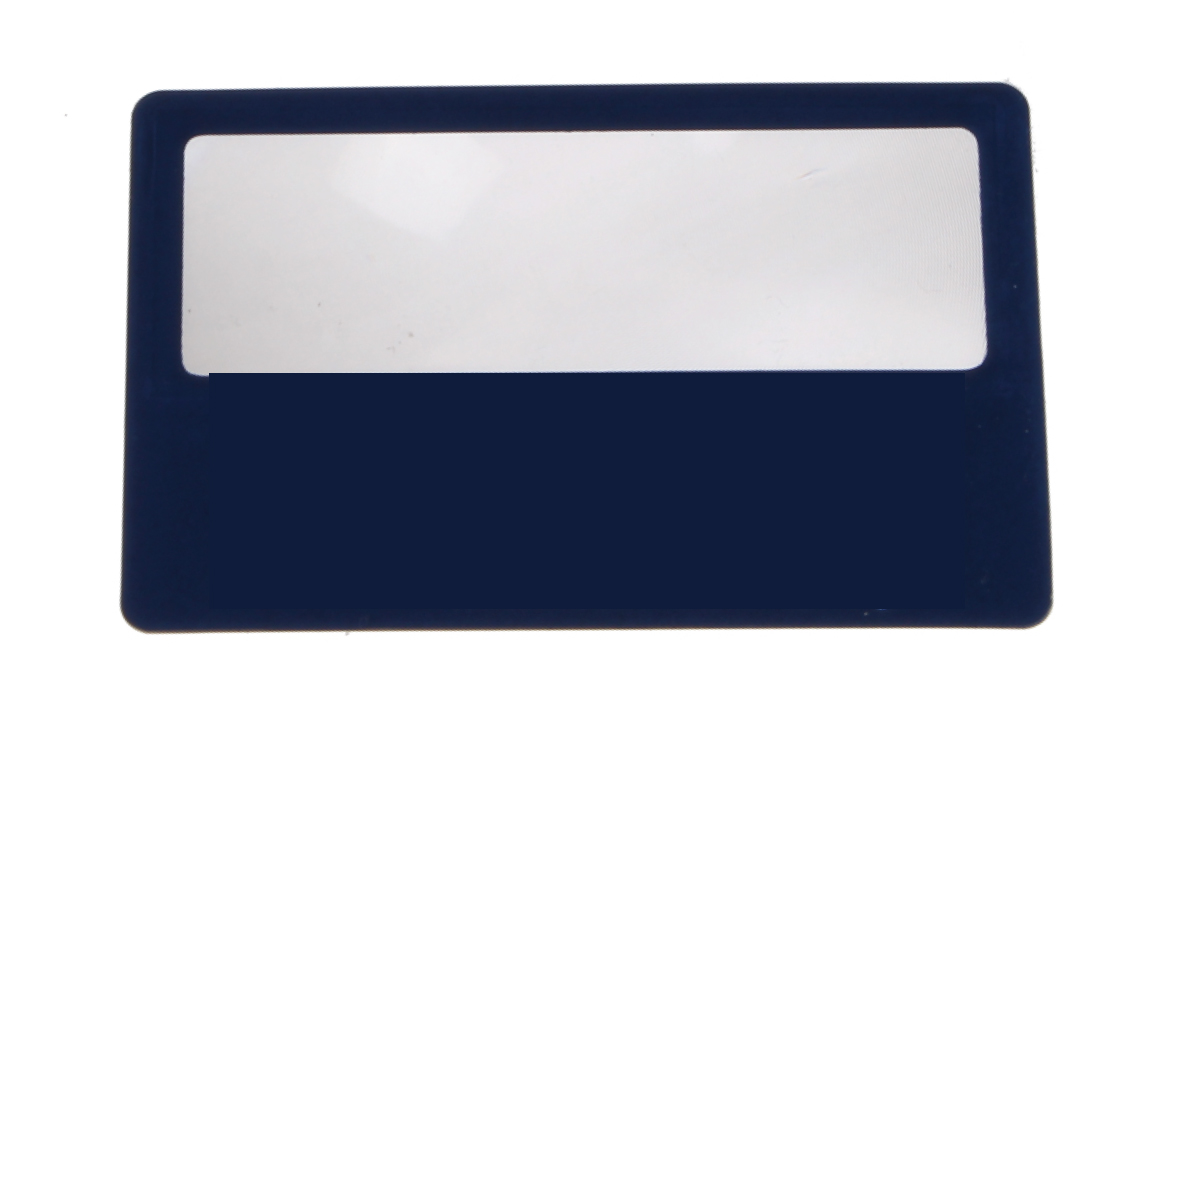 Blue Business Card Magnifier